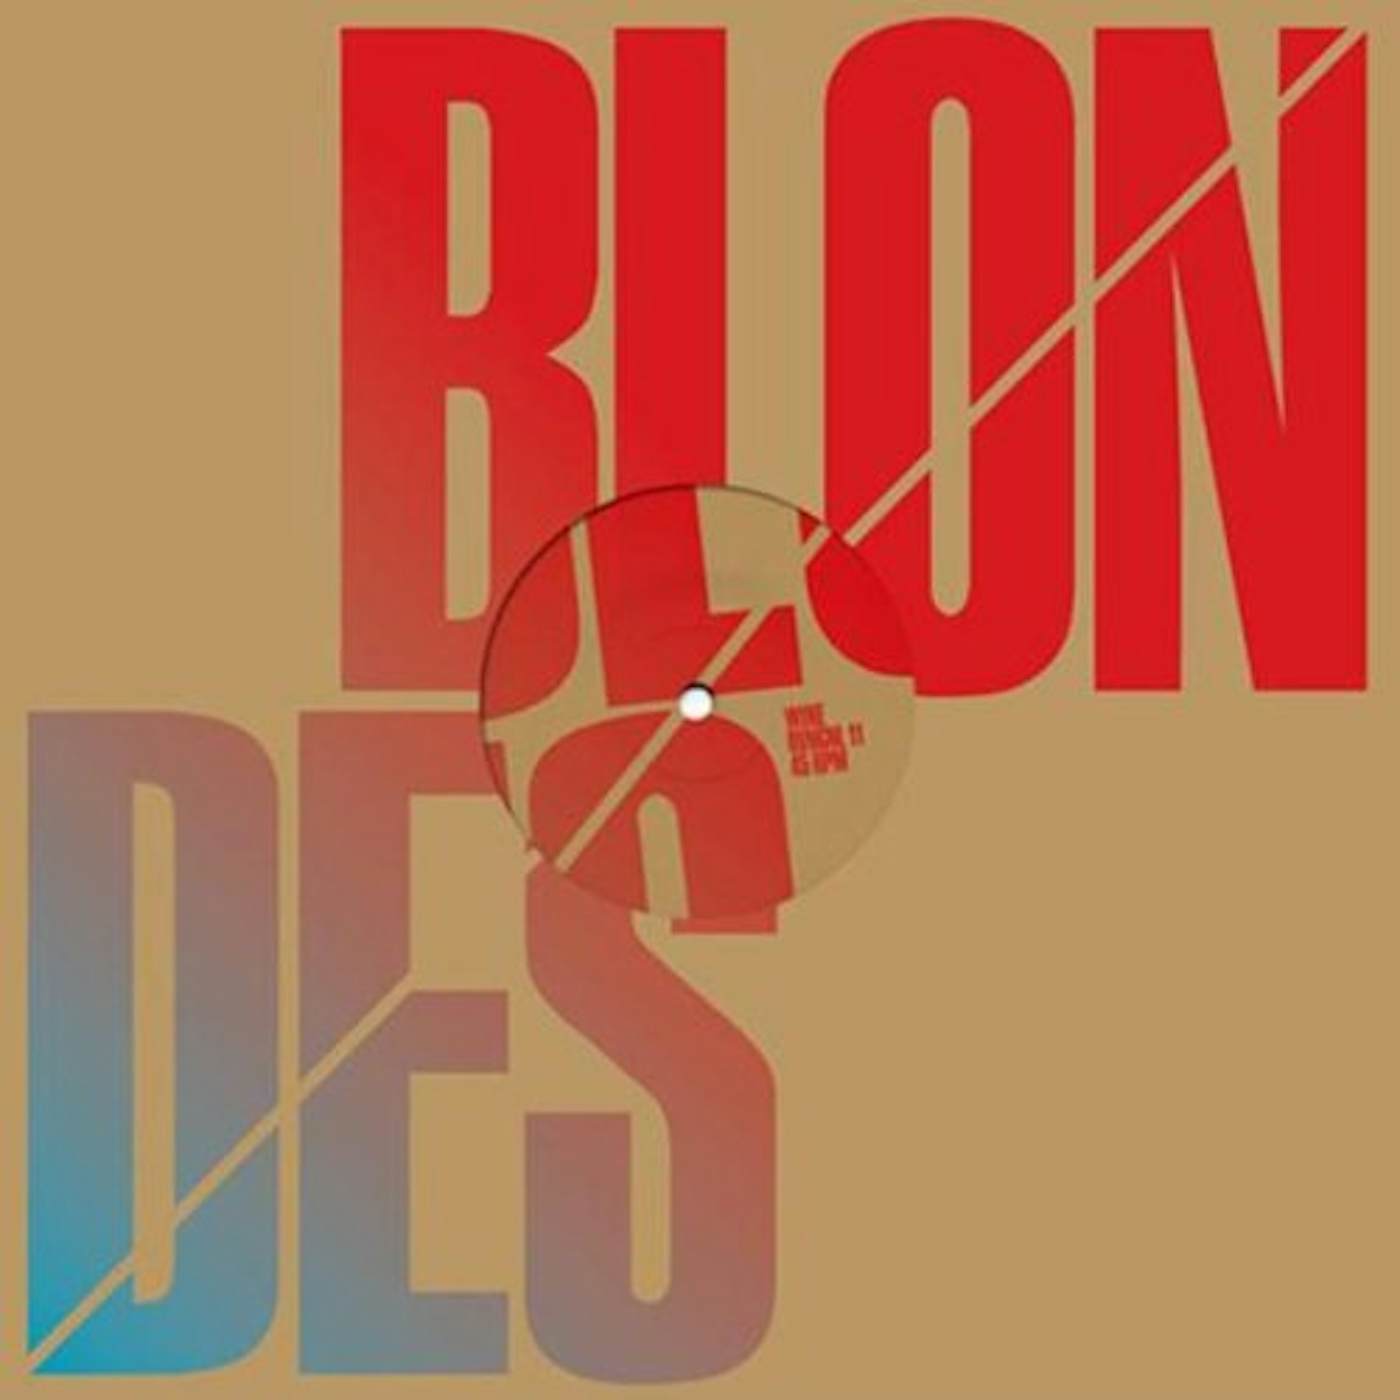 Blondes WINE/WATER Vinyl Record